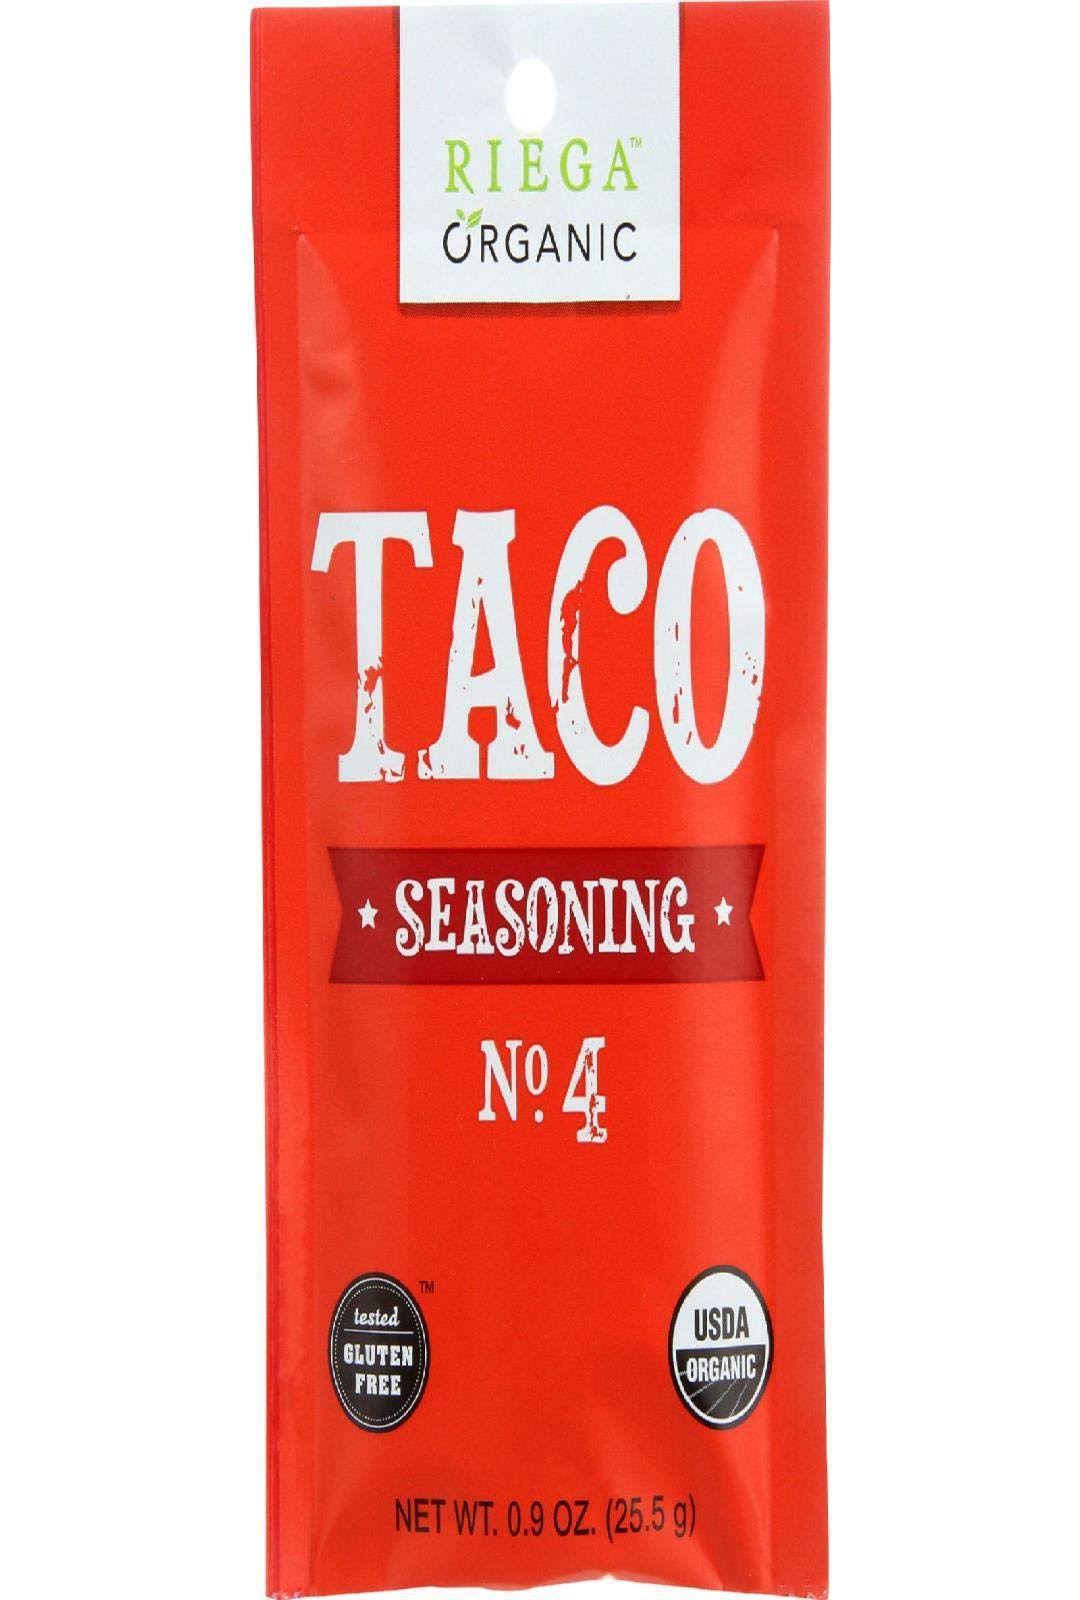 Riega Organic Taco Seasoning No. 4